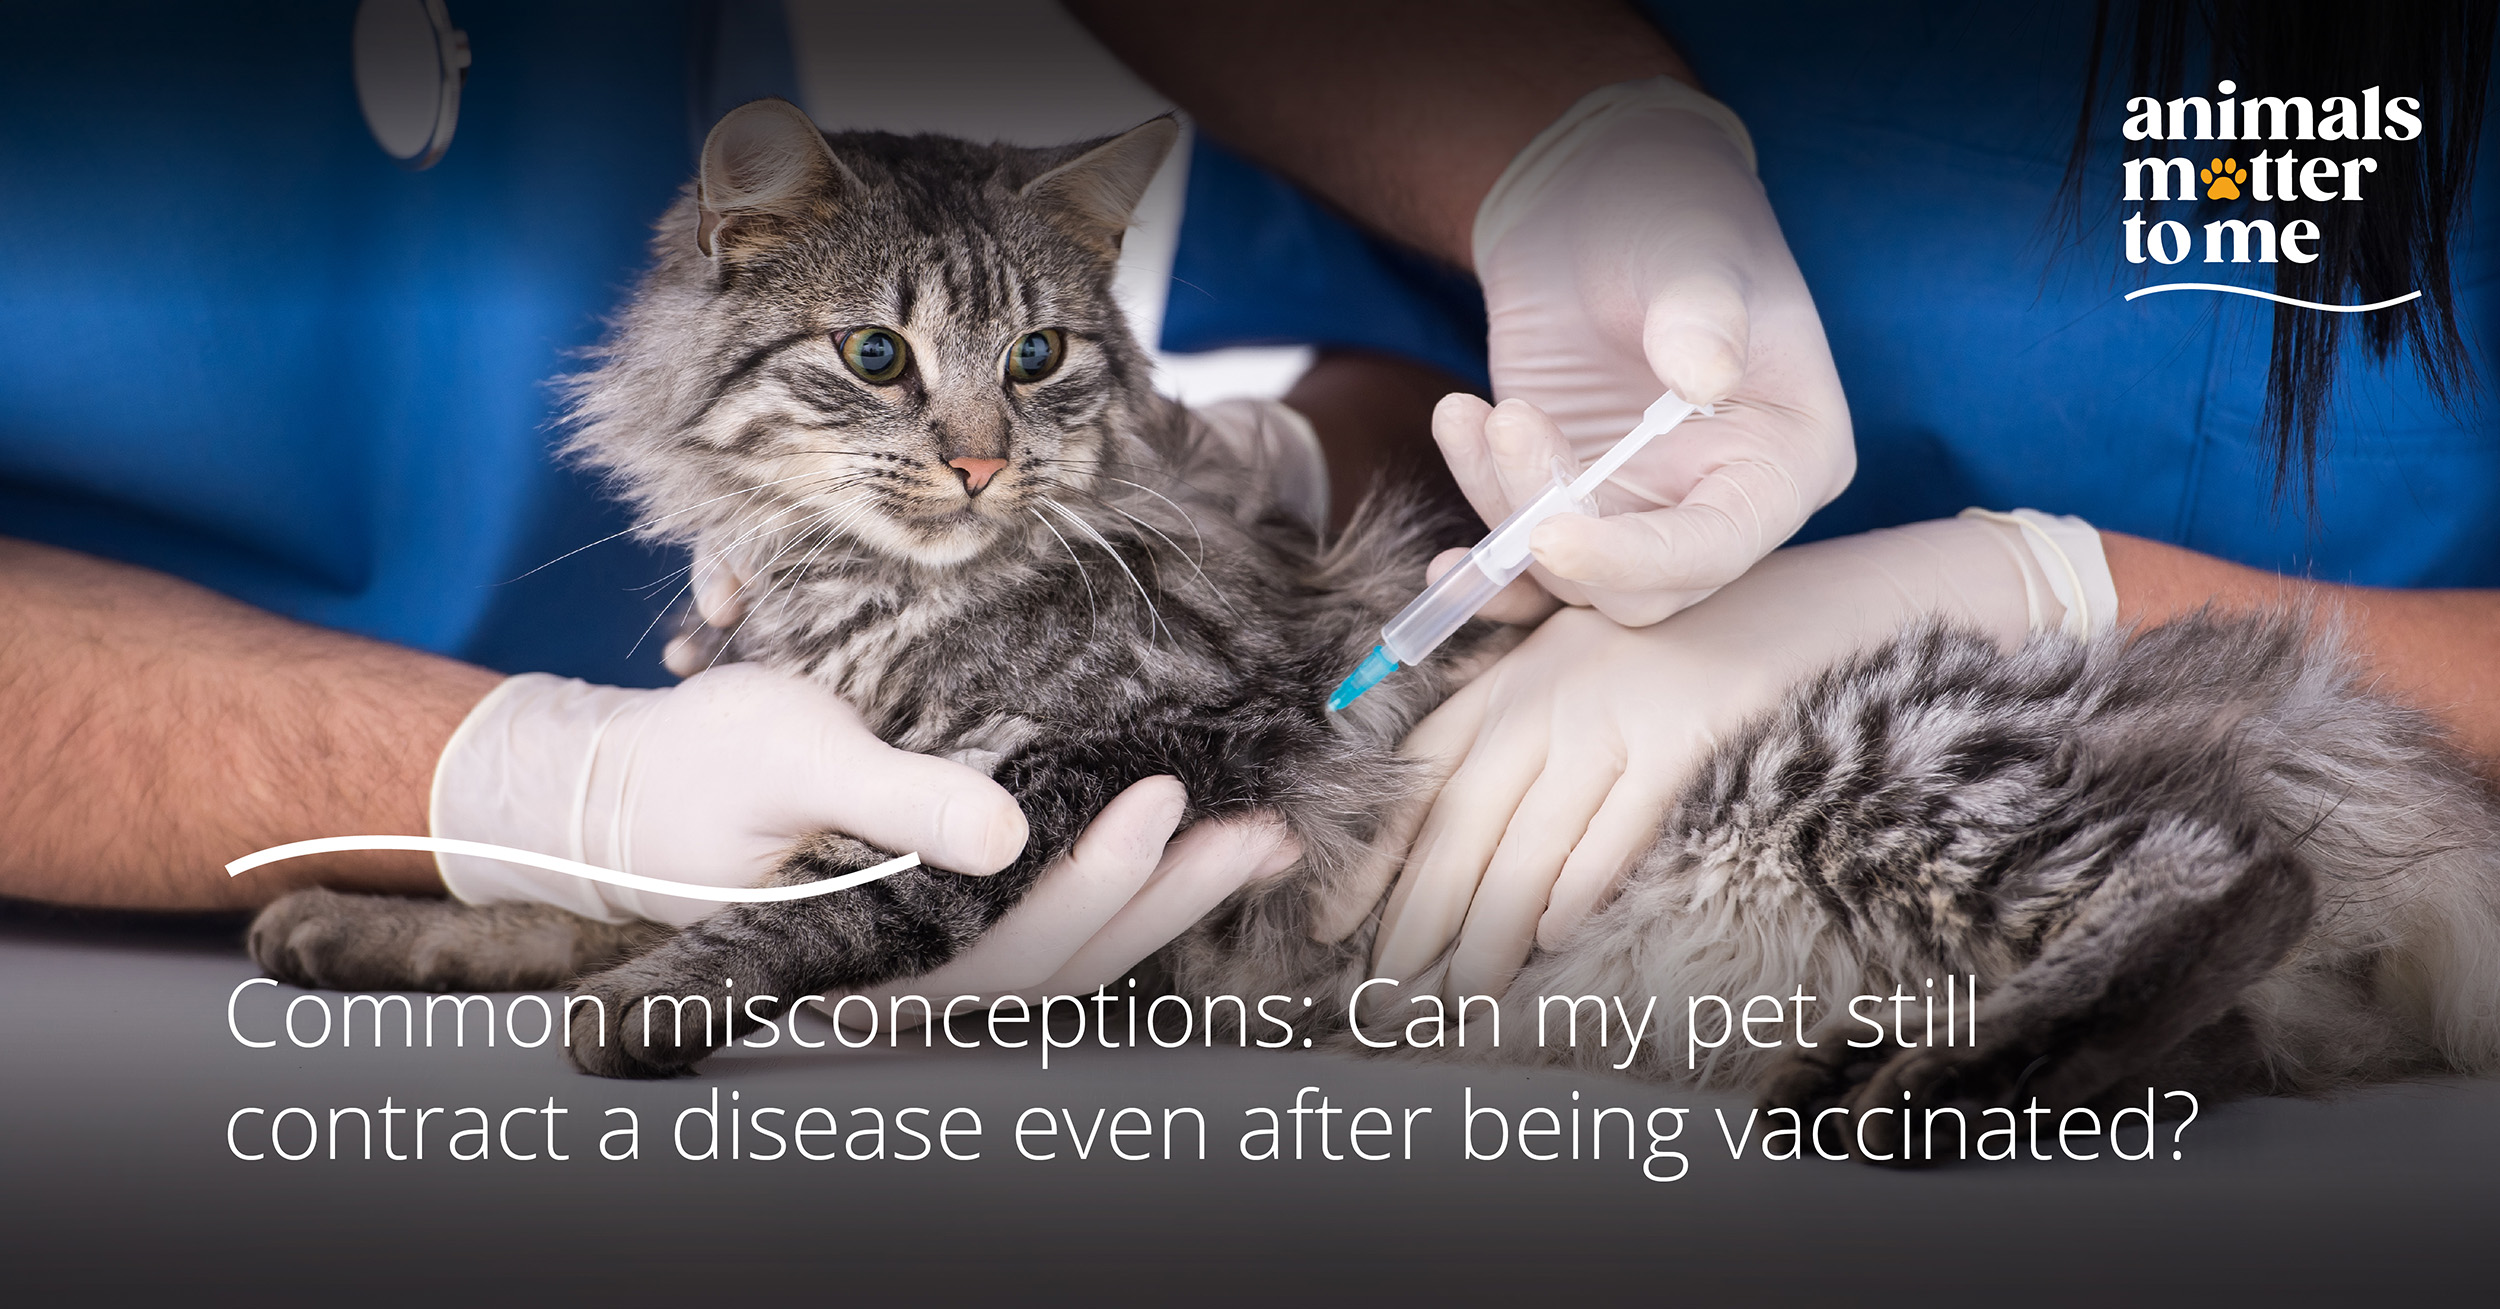 Pet vaccination